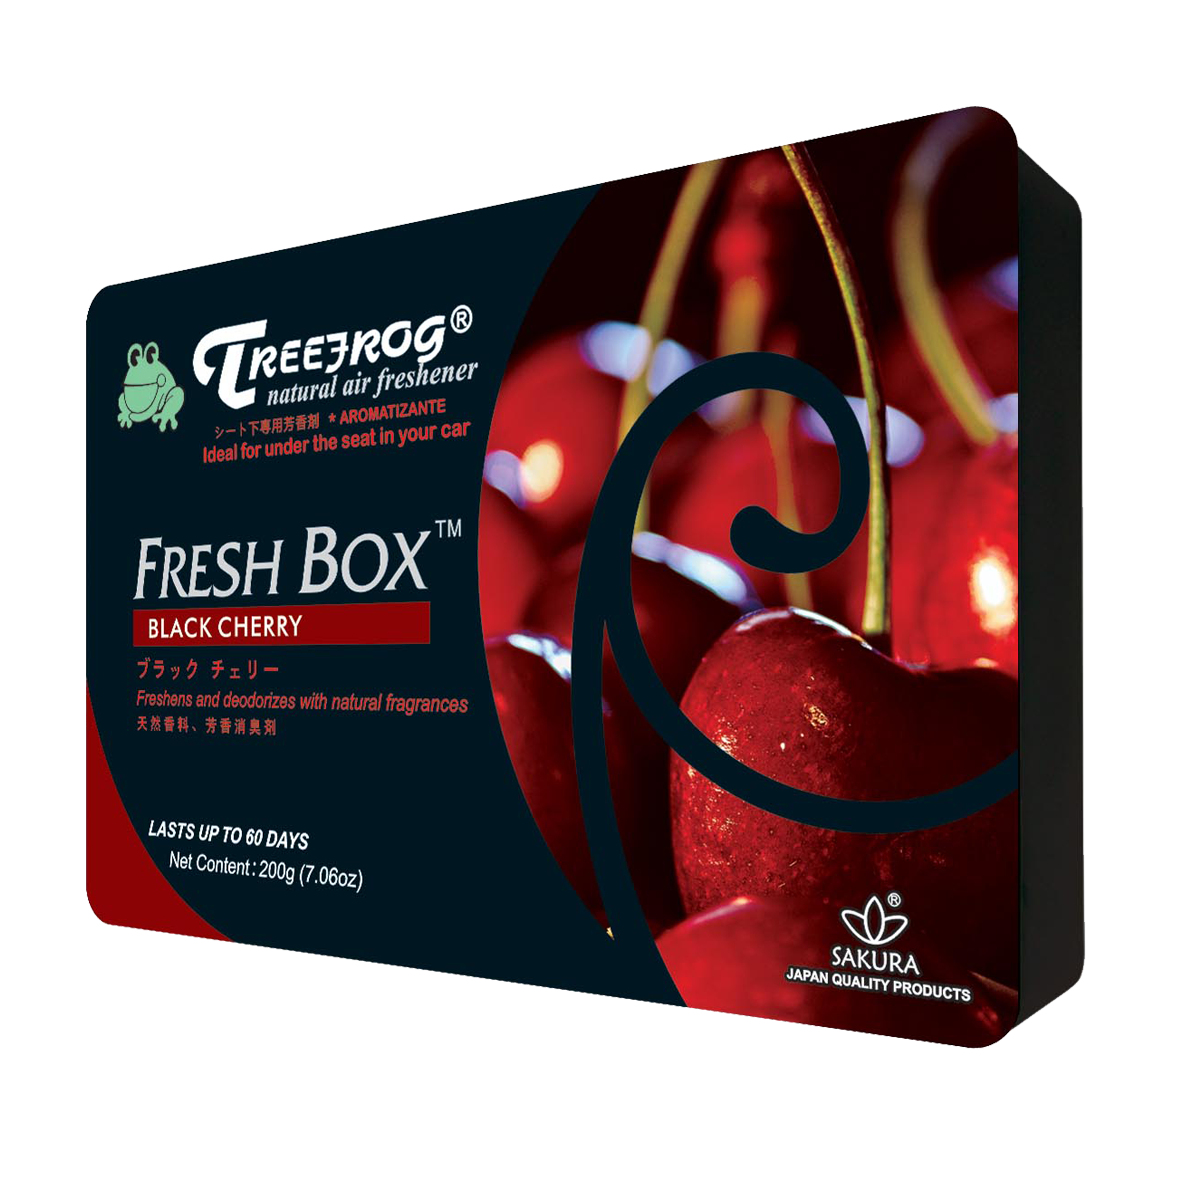 Treefrog Freshbox Natural Air Freshener - Black Cherry Scent